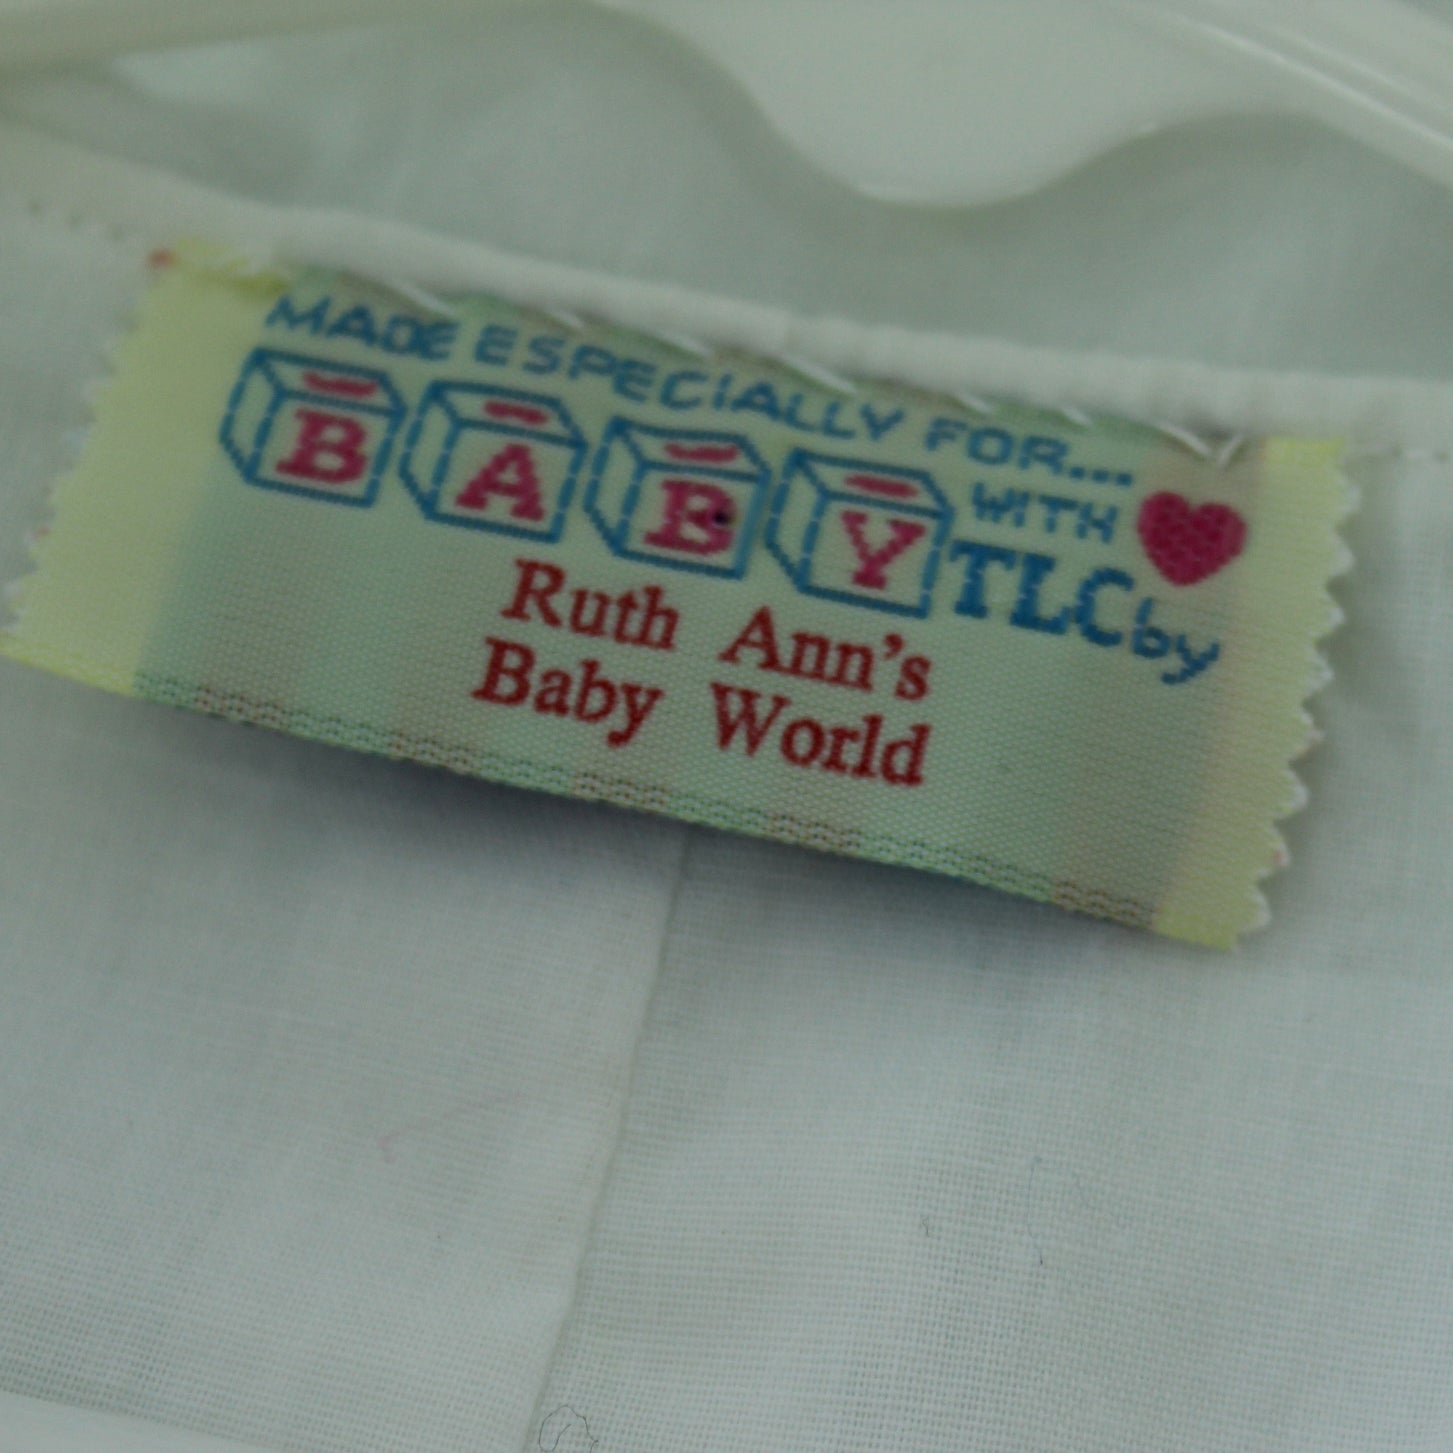 Sailor Design Baby White Faille Romper Ruth Ann Baby's World original maker tag